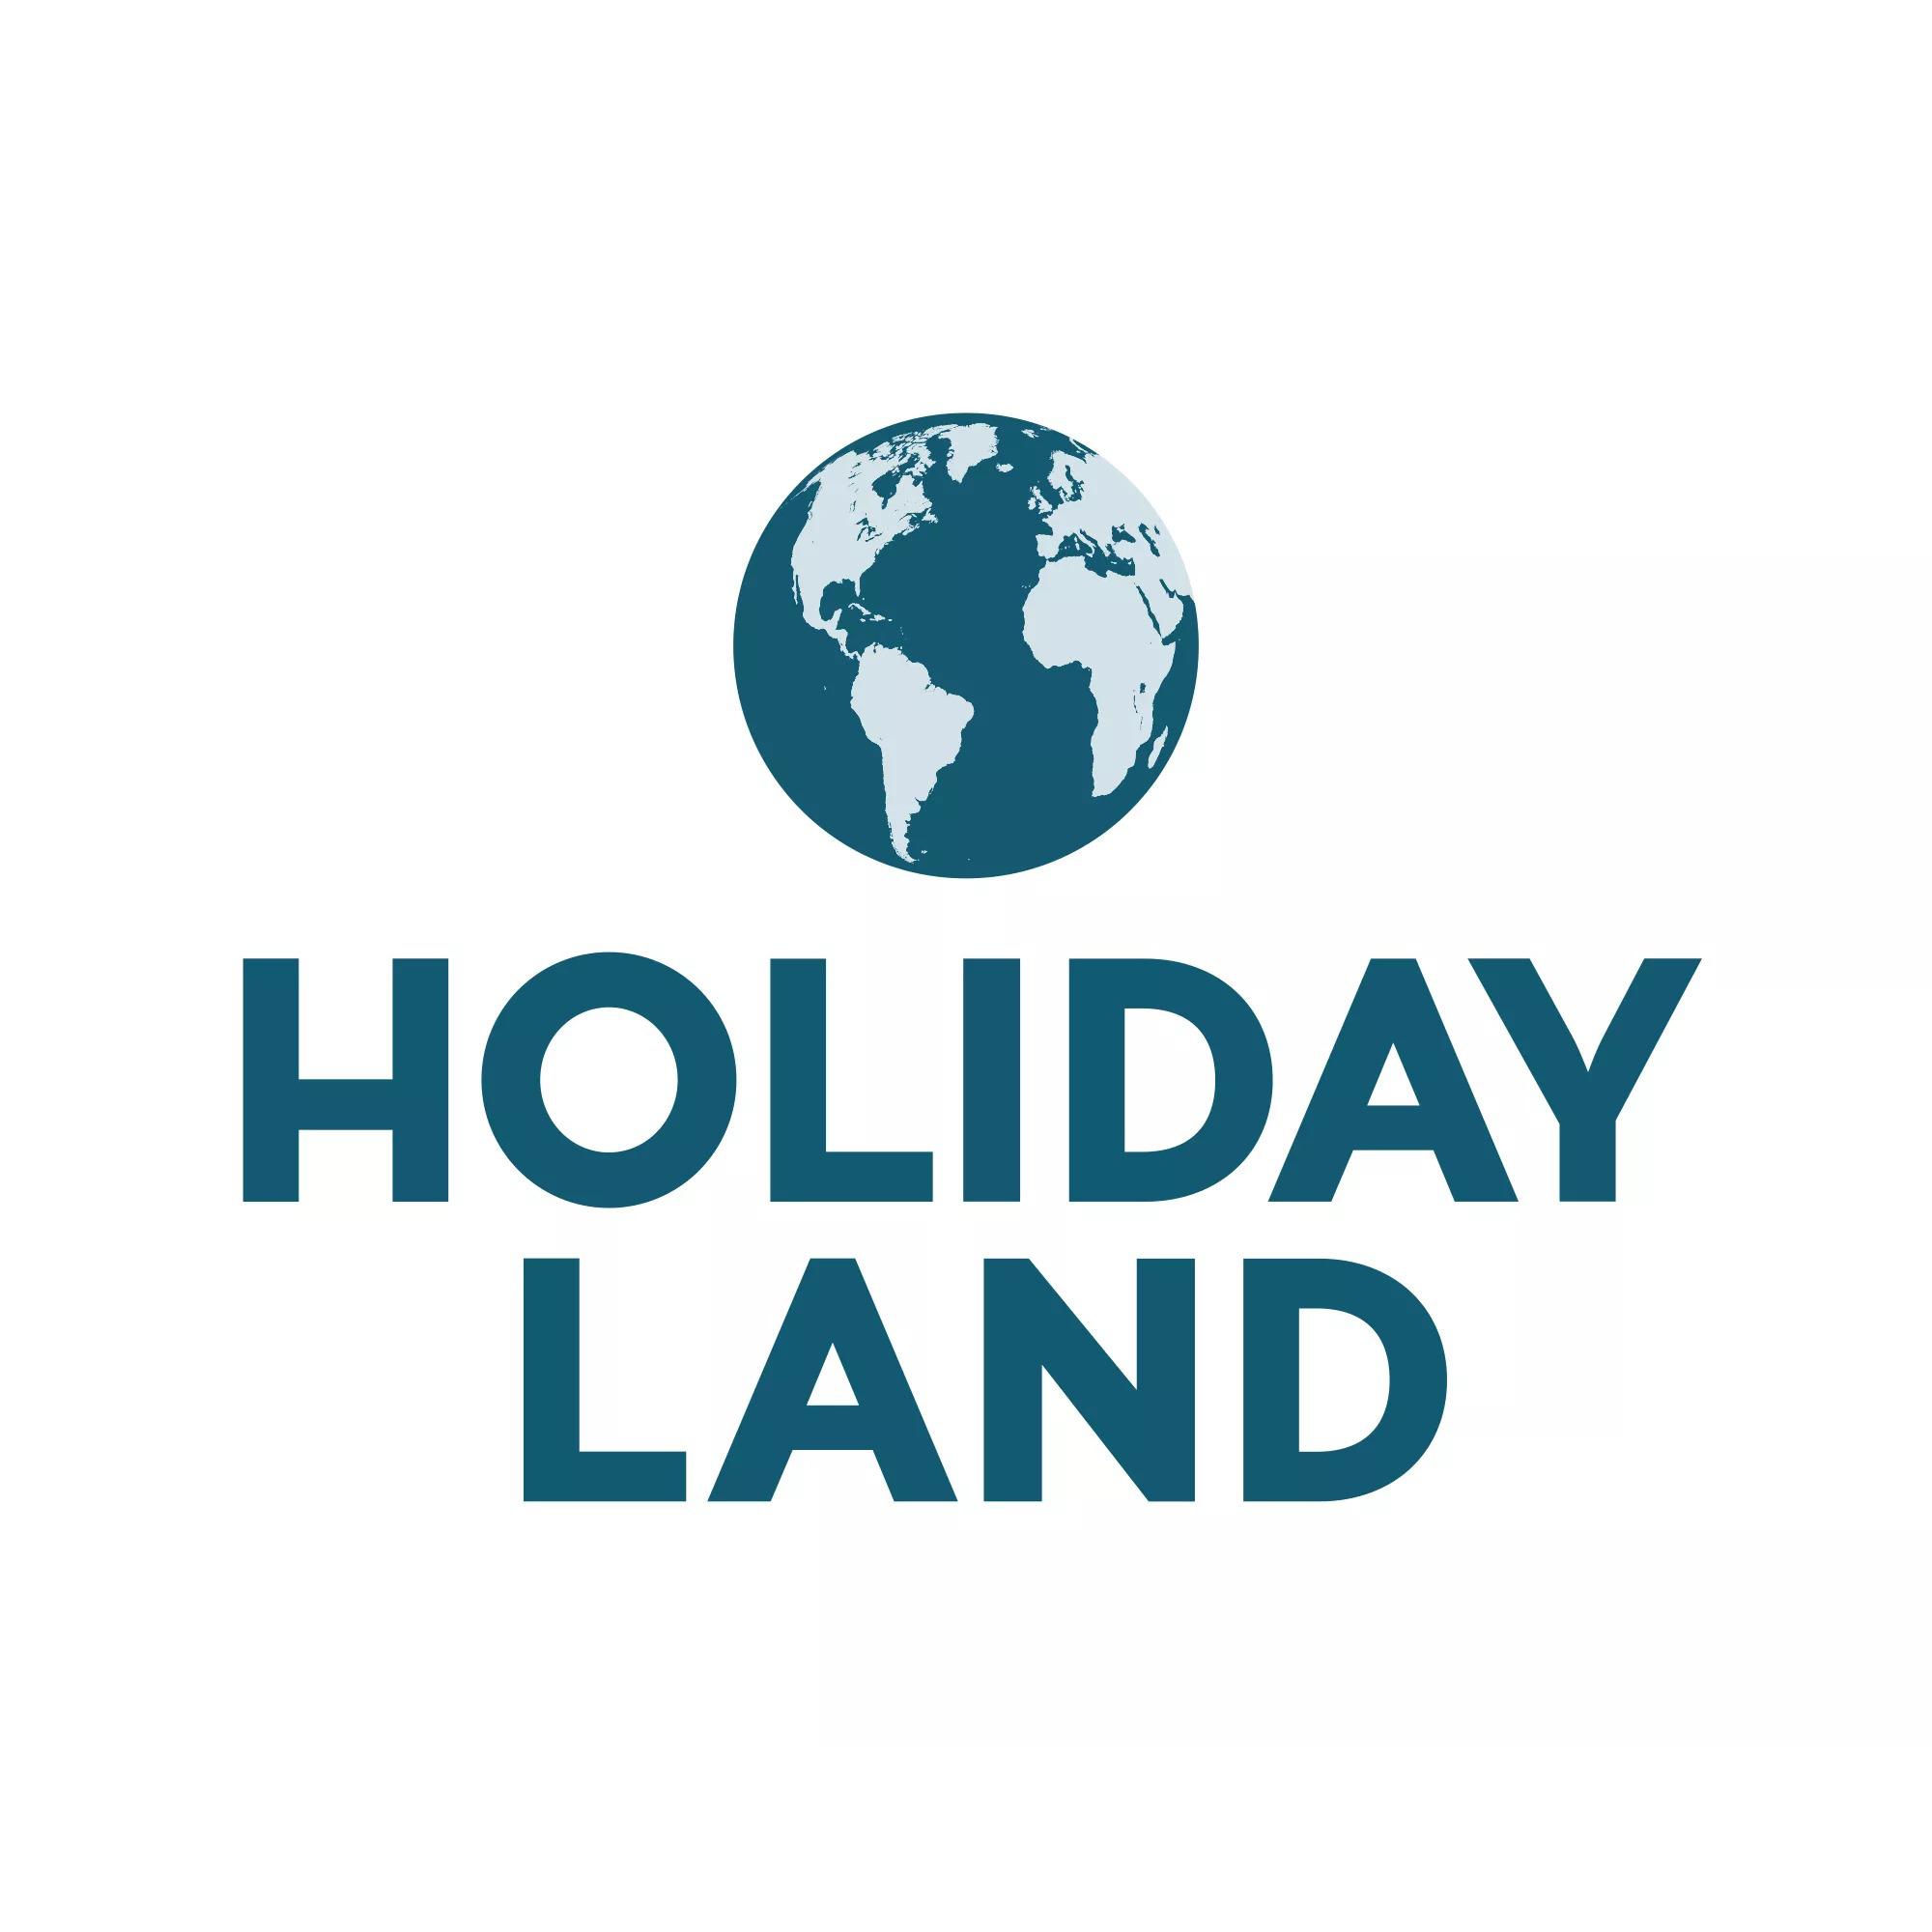 HOLIDAY LAND Reisebüro Inh. Claudia Kern Logo